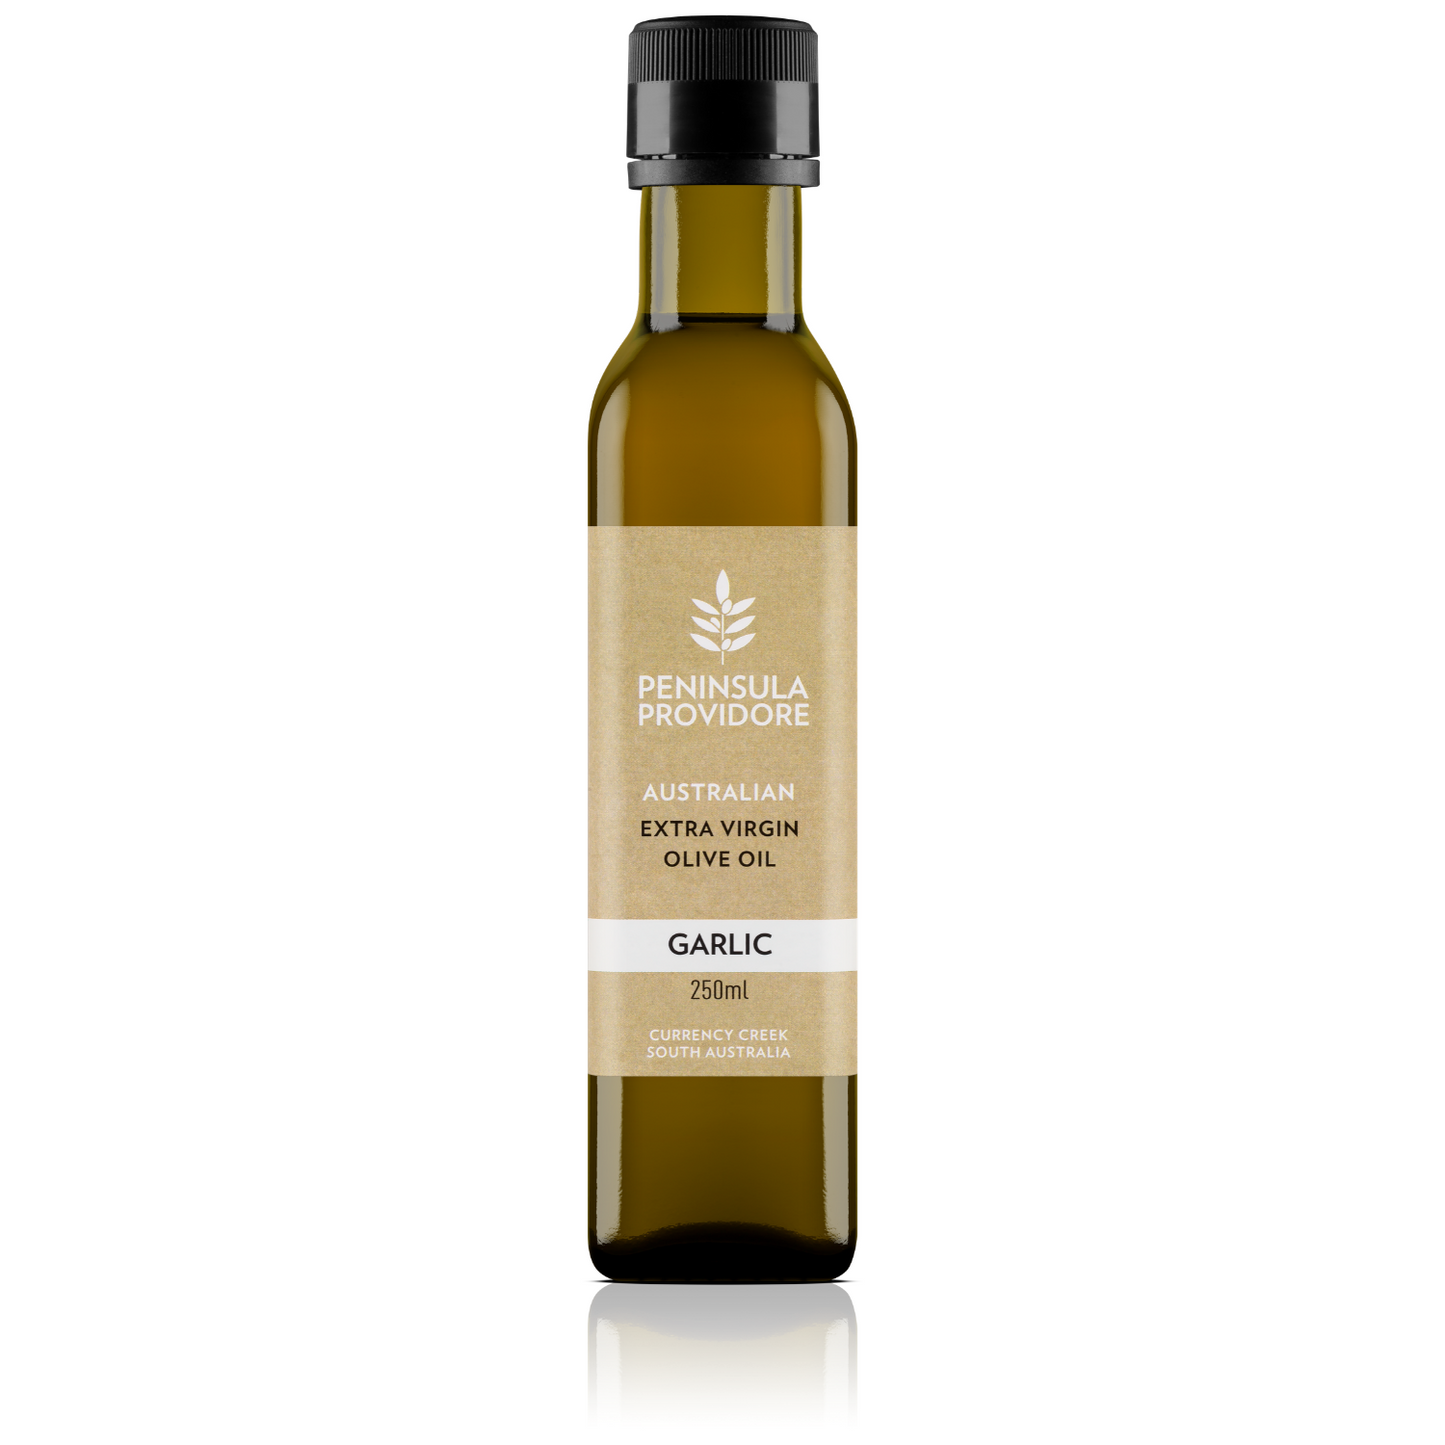 Peninsula Providore Garlic Olive Oil 100ml